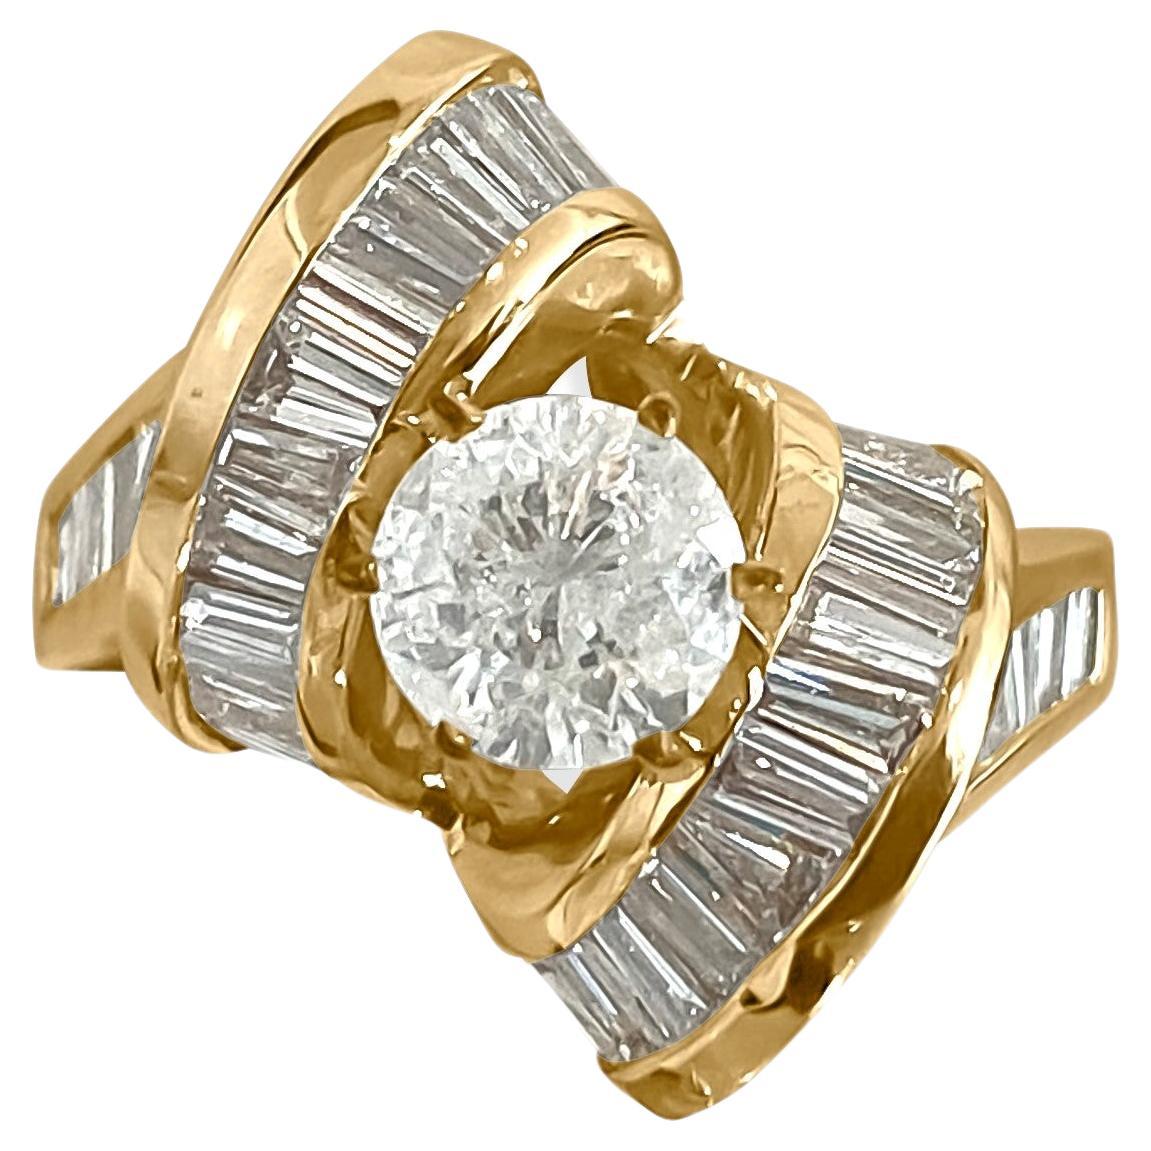 Bague de fiançailles Art déco en or 14 carats avec diamants de 3,00 carats